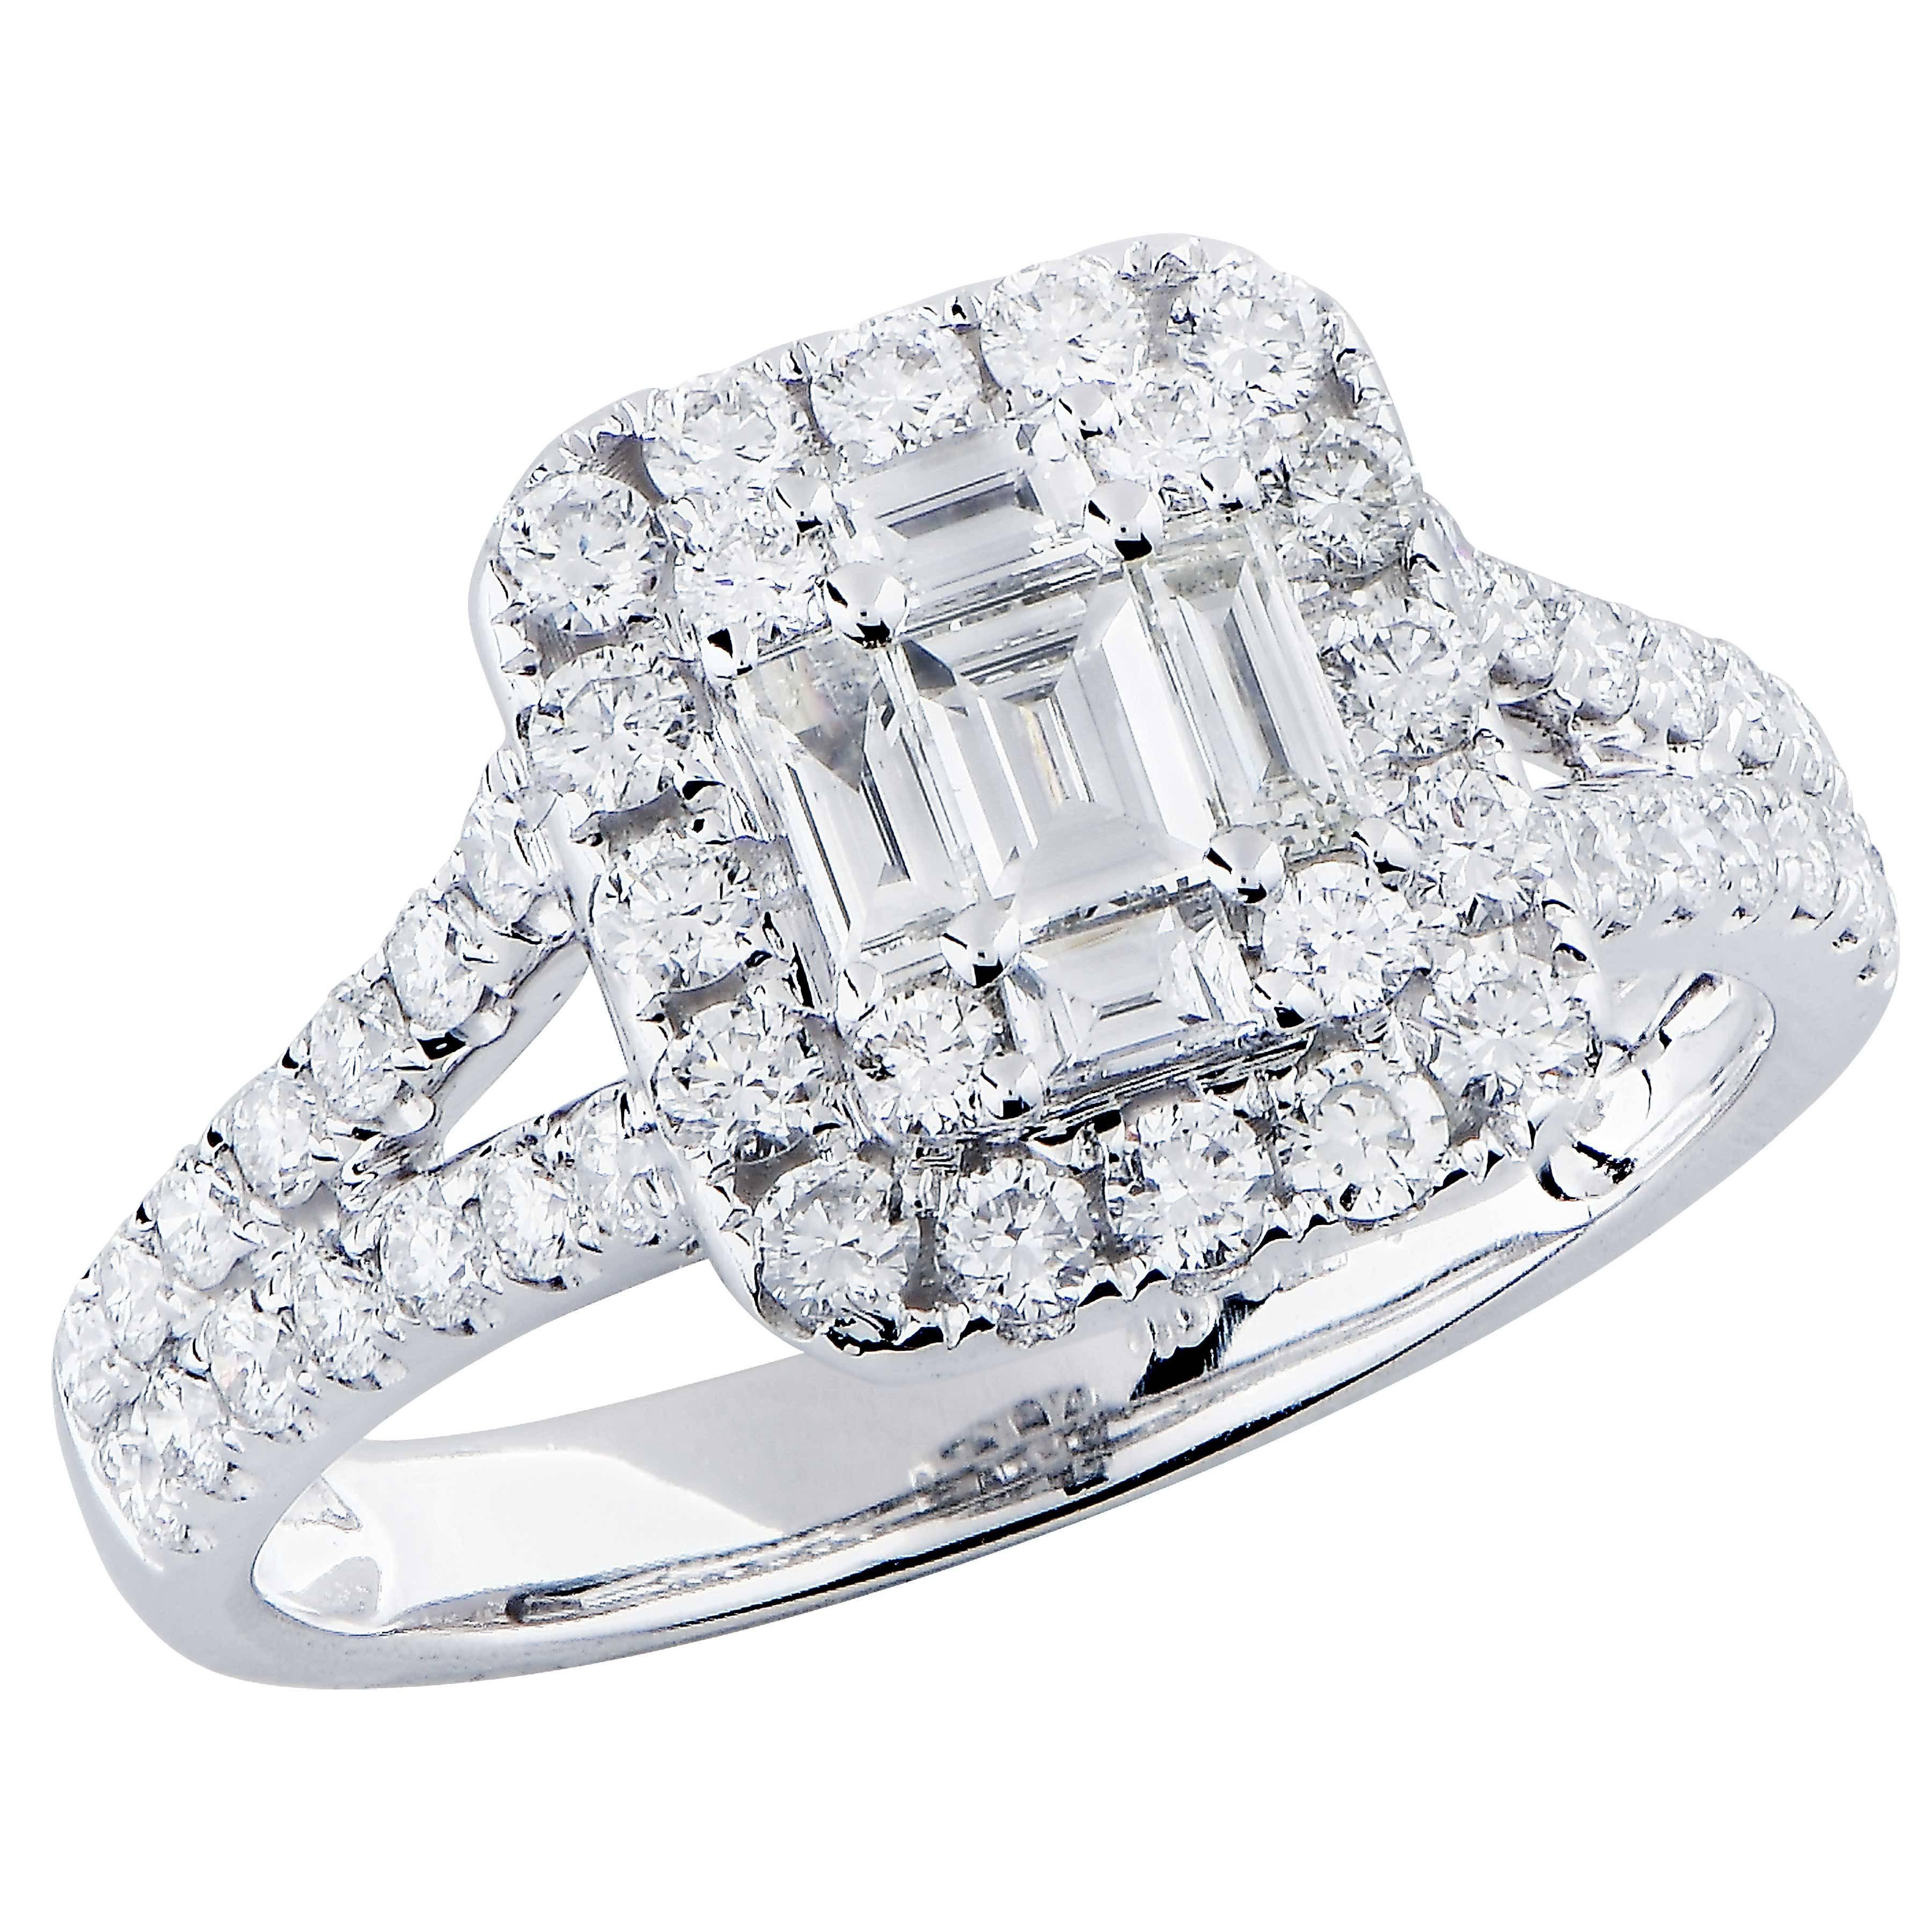 1.15 Carat Diamond Fashion Ring